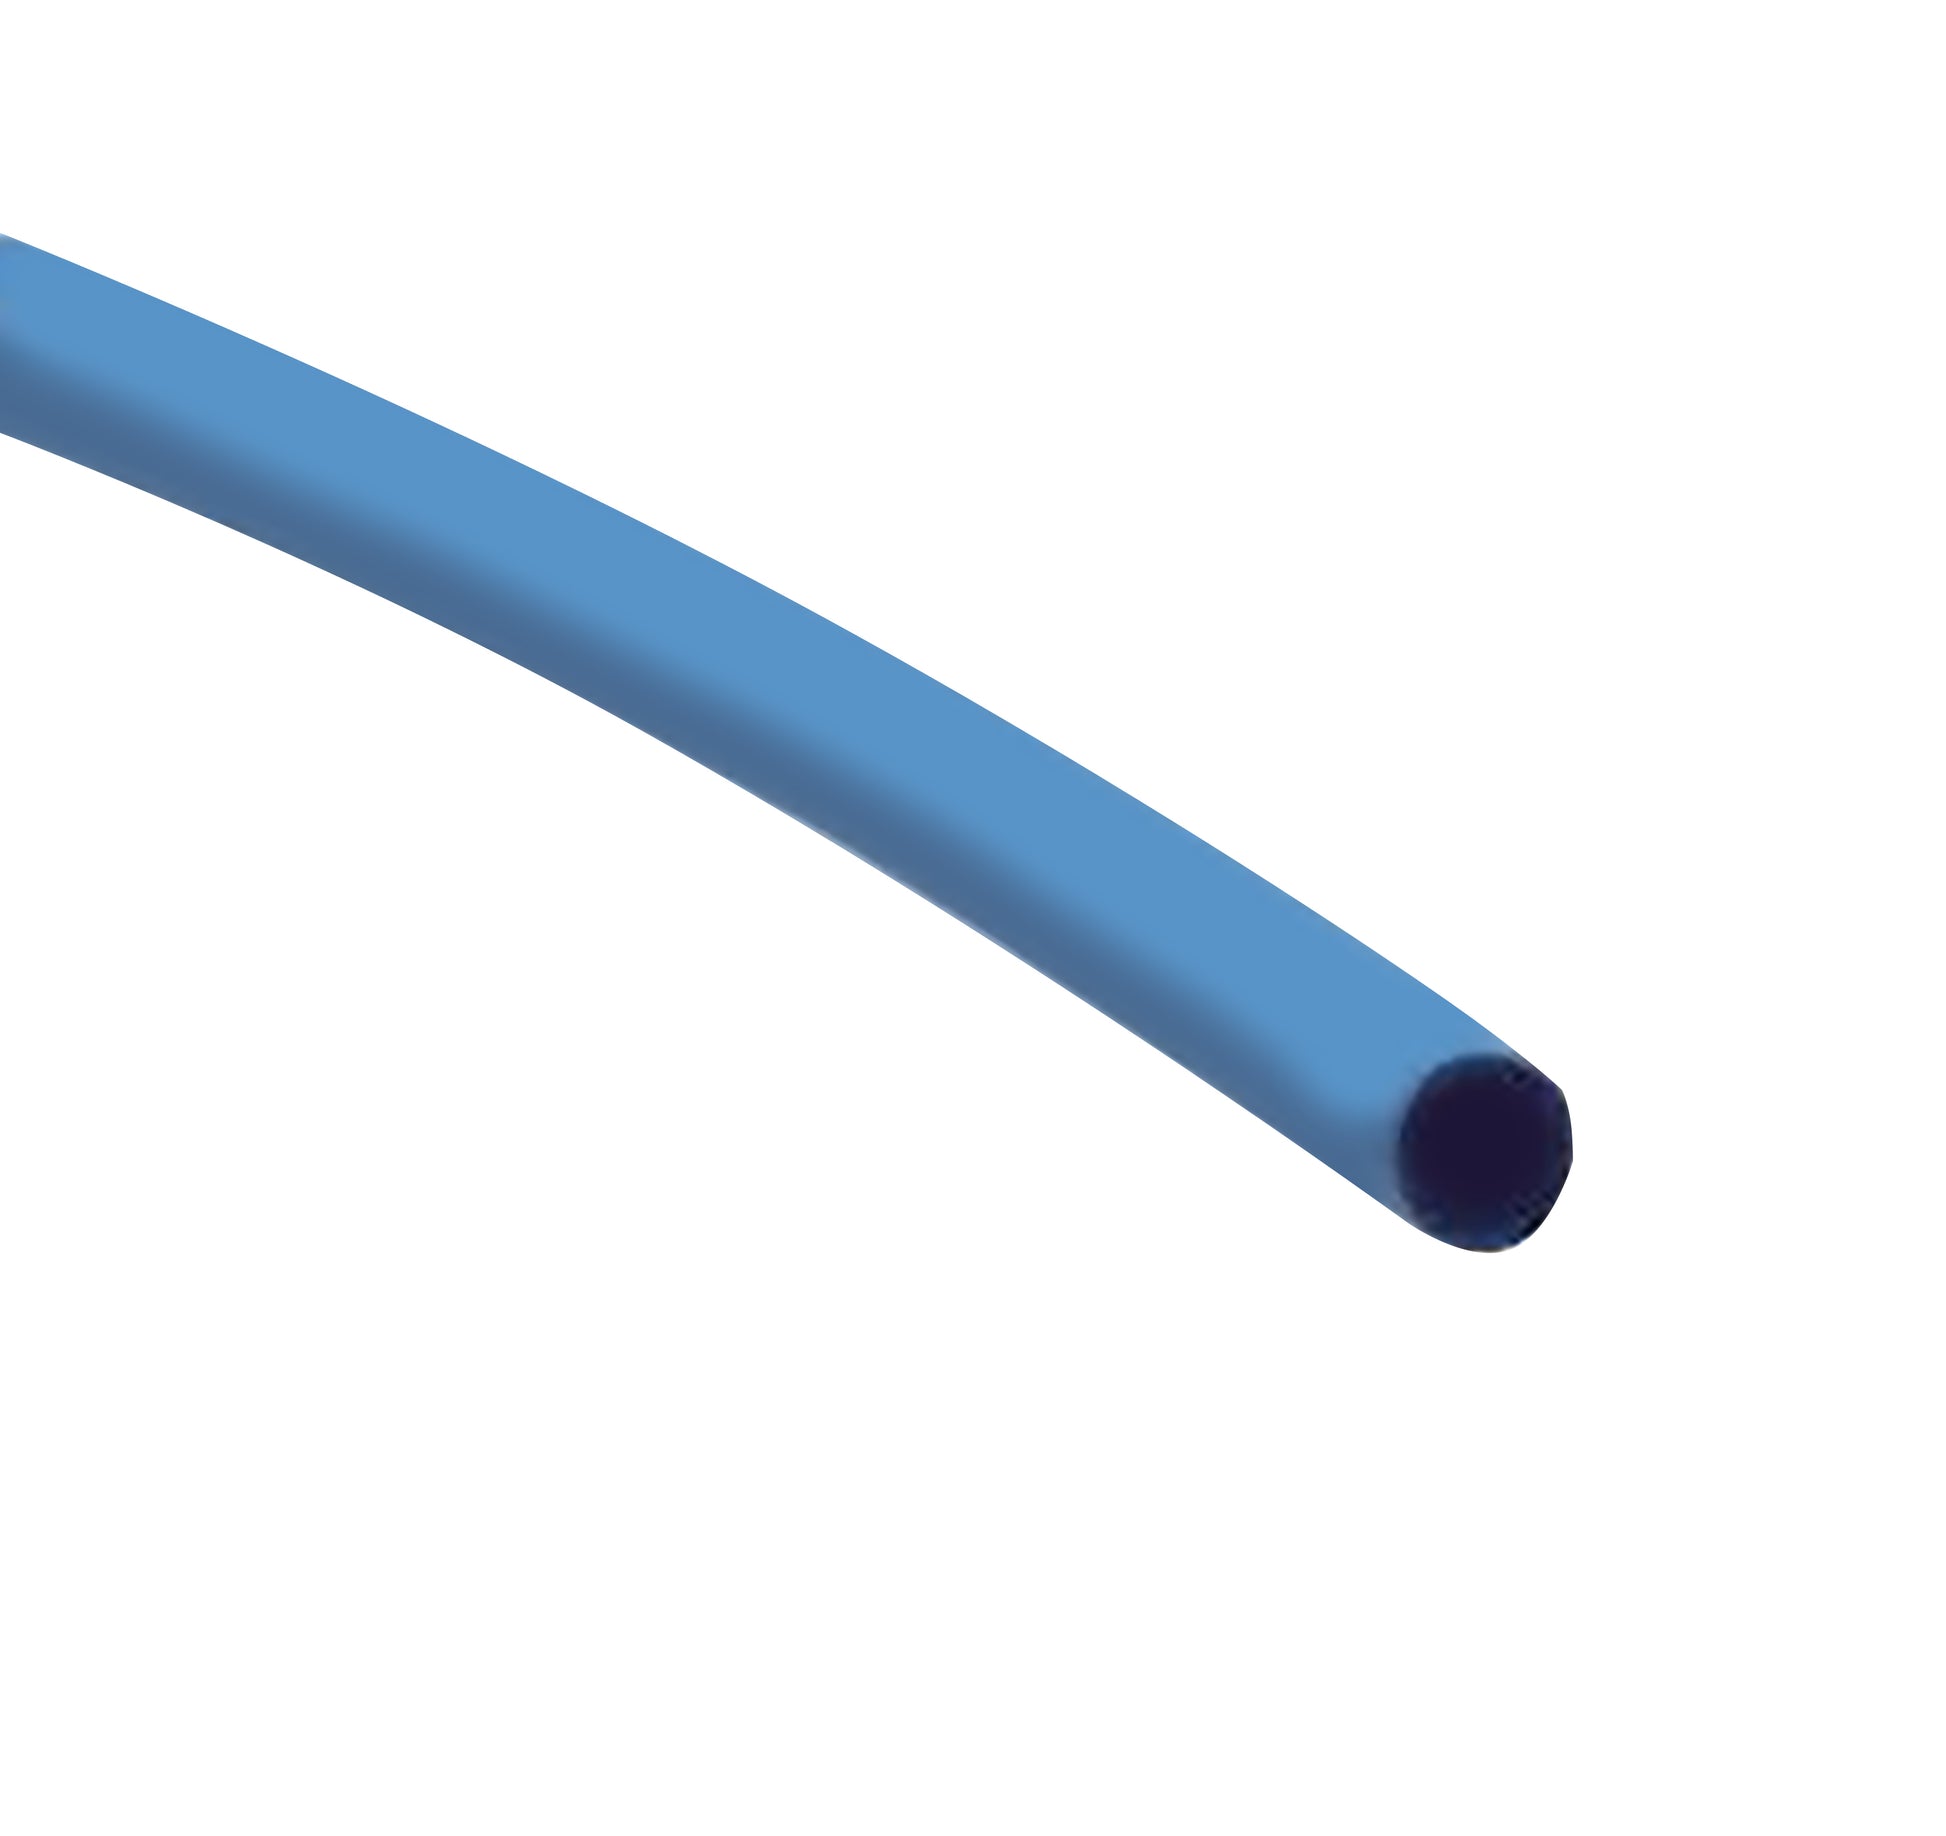 Flexible Thin Single Wall Non-Adhesive Heat Shrink Tubing 2:1 Blue 3/16" ID - 12" Inch 10 Pack